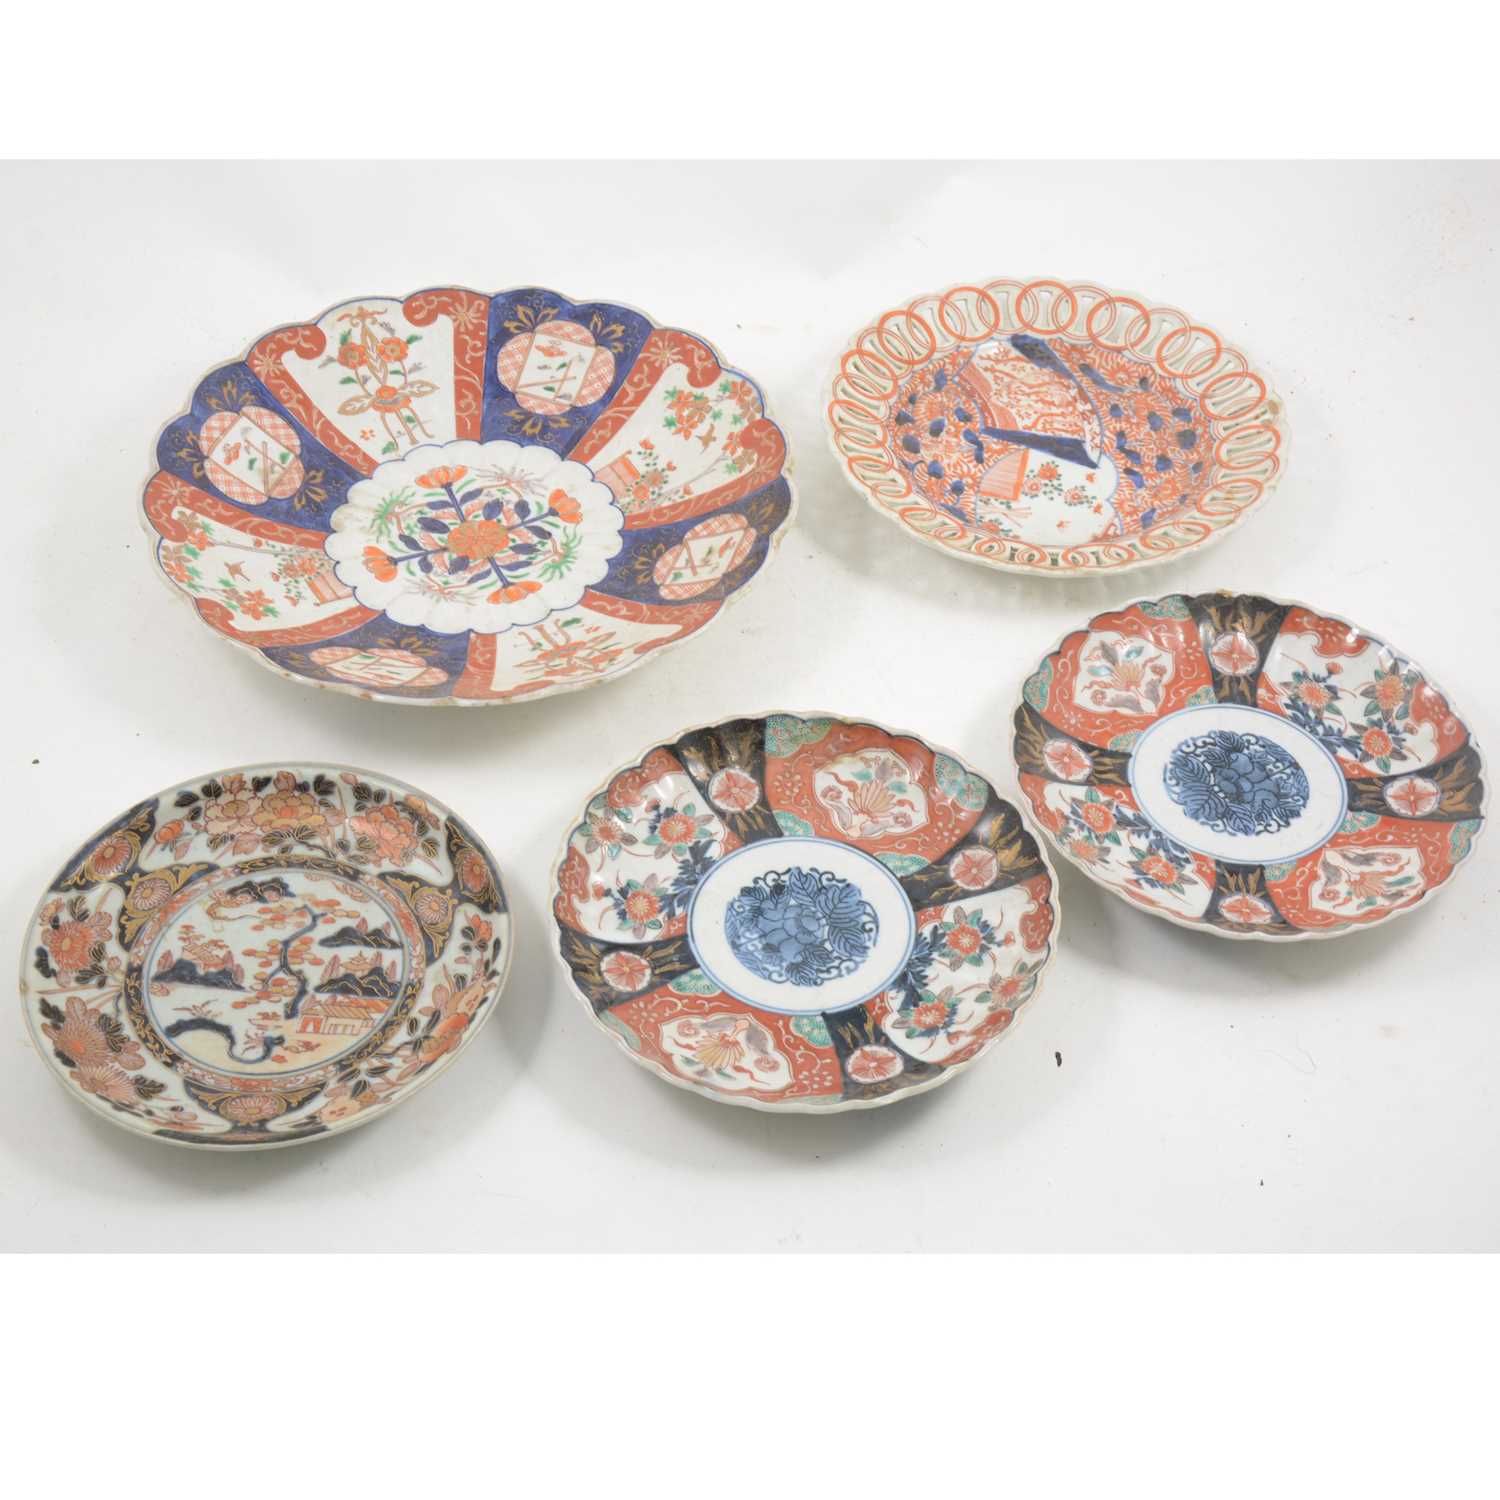 Lot 19 - Five Imari plates and dishes